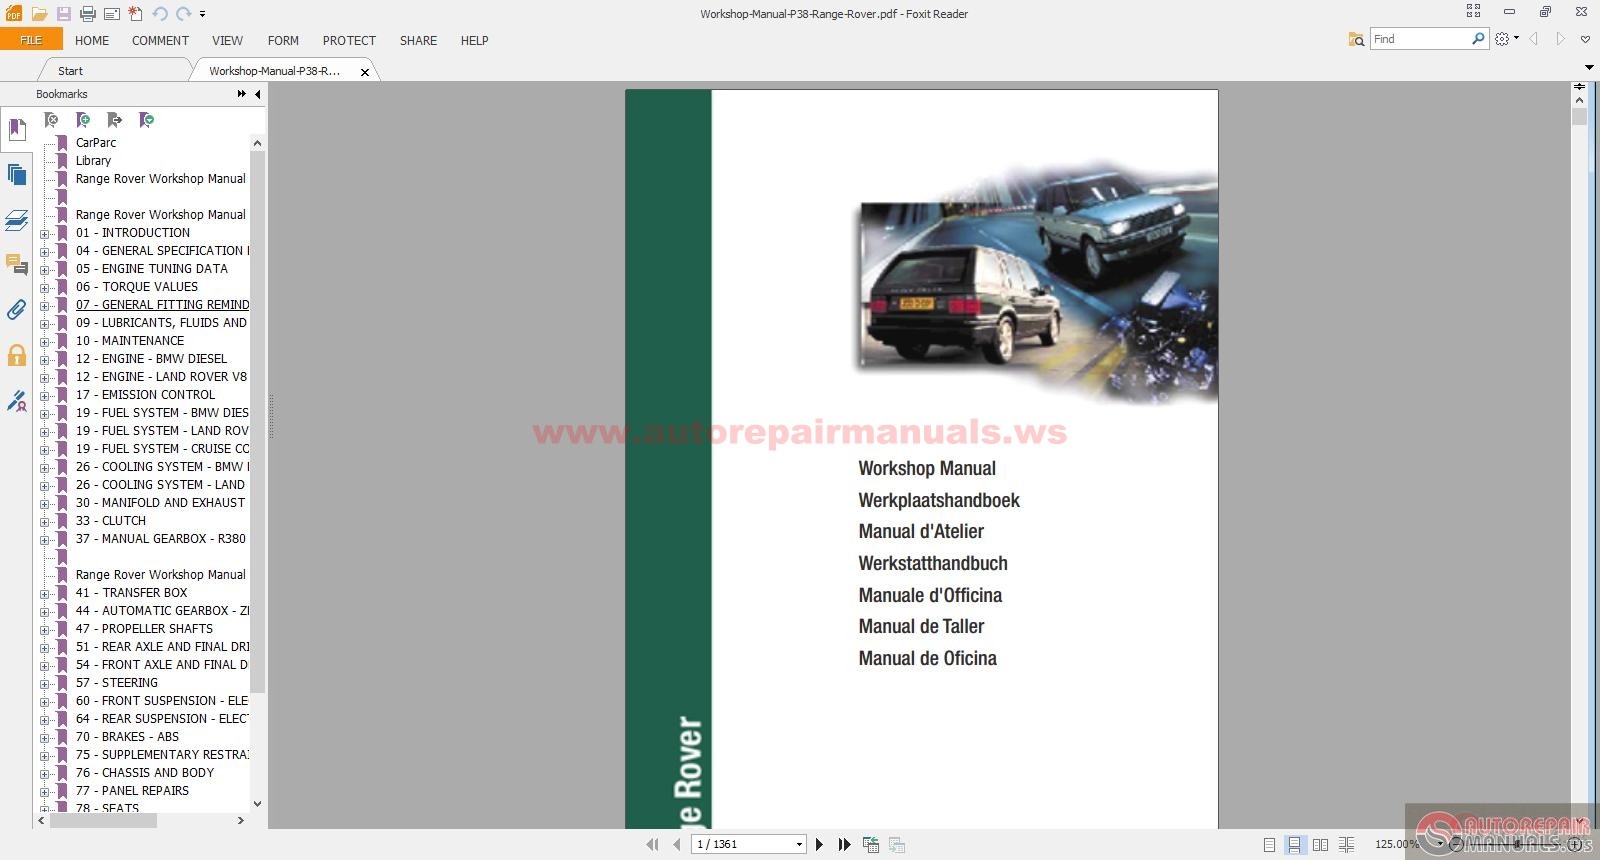 Manual | Auto Repair Manual Forum - Heavy Equipment Forums - Download ...